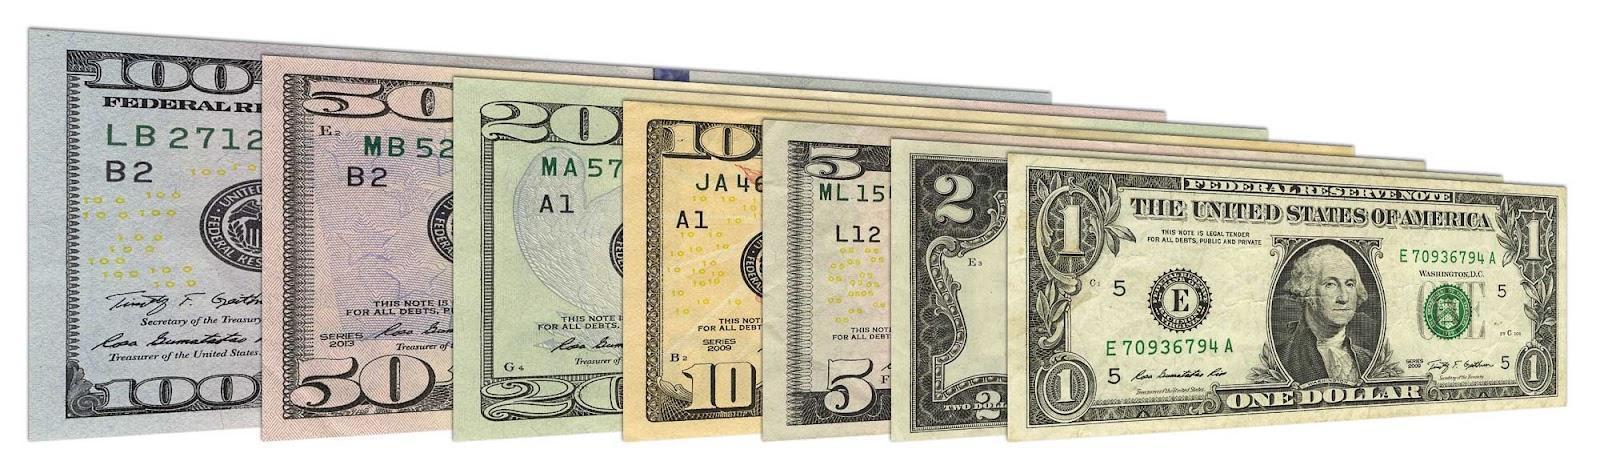 US Dollar banknote series